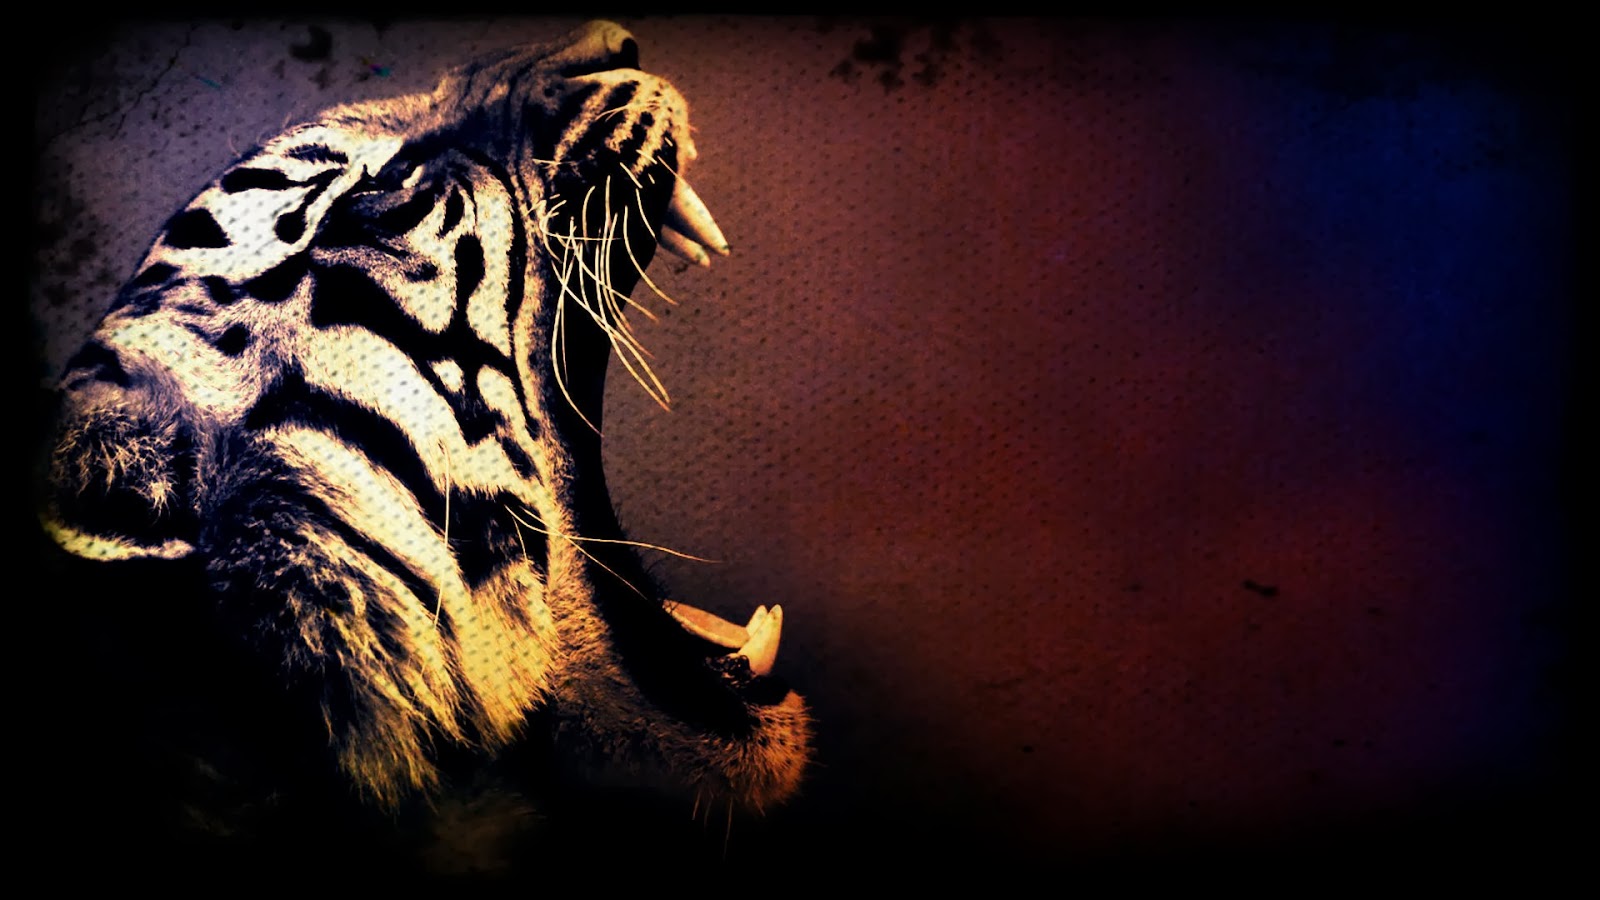 Cool tiger images wallpaper